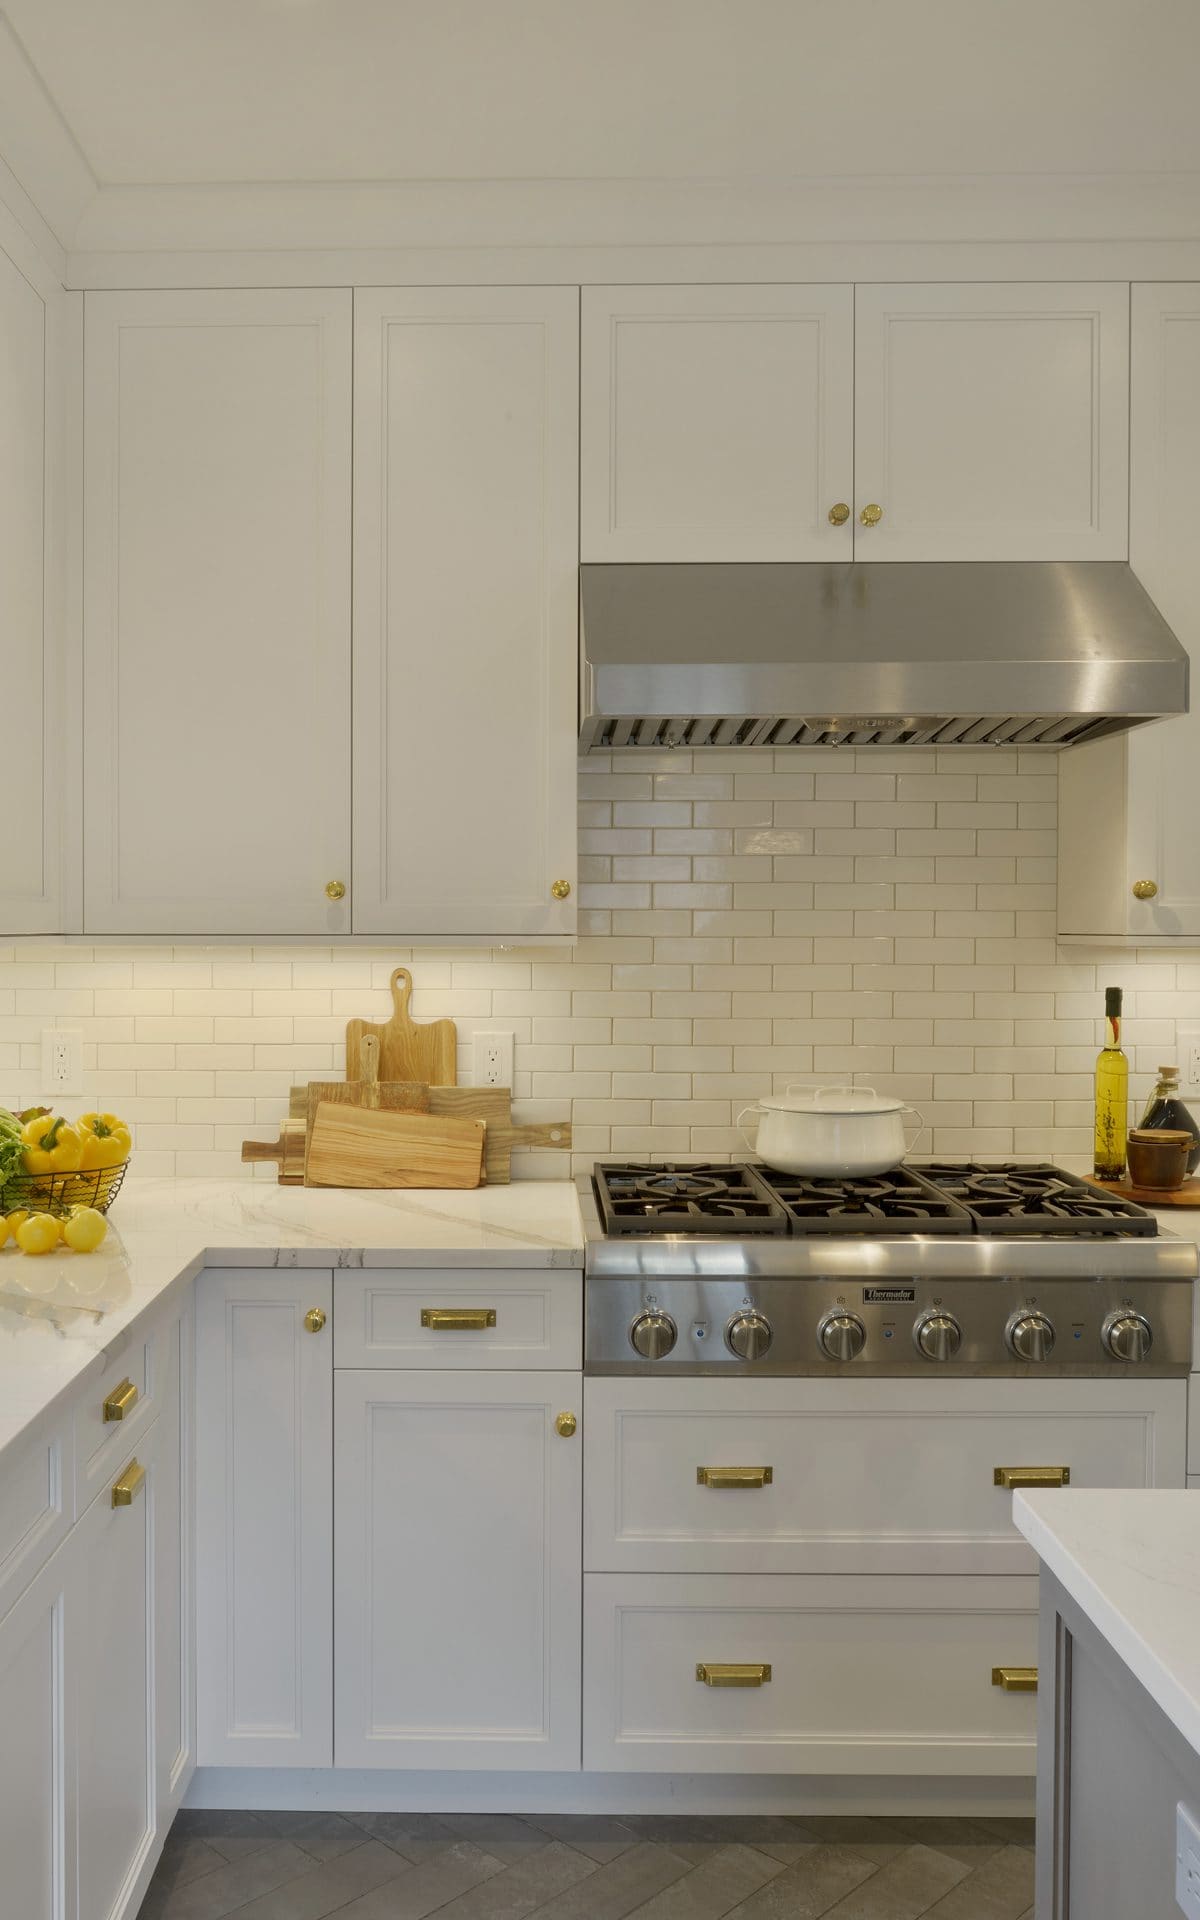 Classic kitchen features white Bilotta cabinets, luxurious tile backsplash, custom range and herringbone pattern floor.